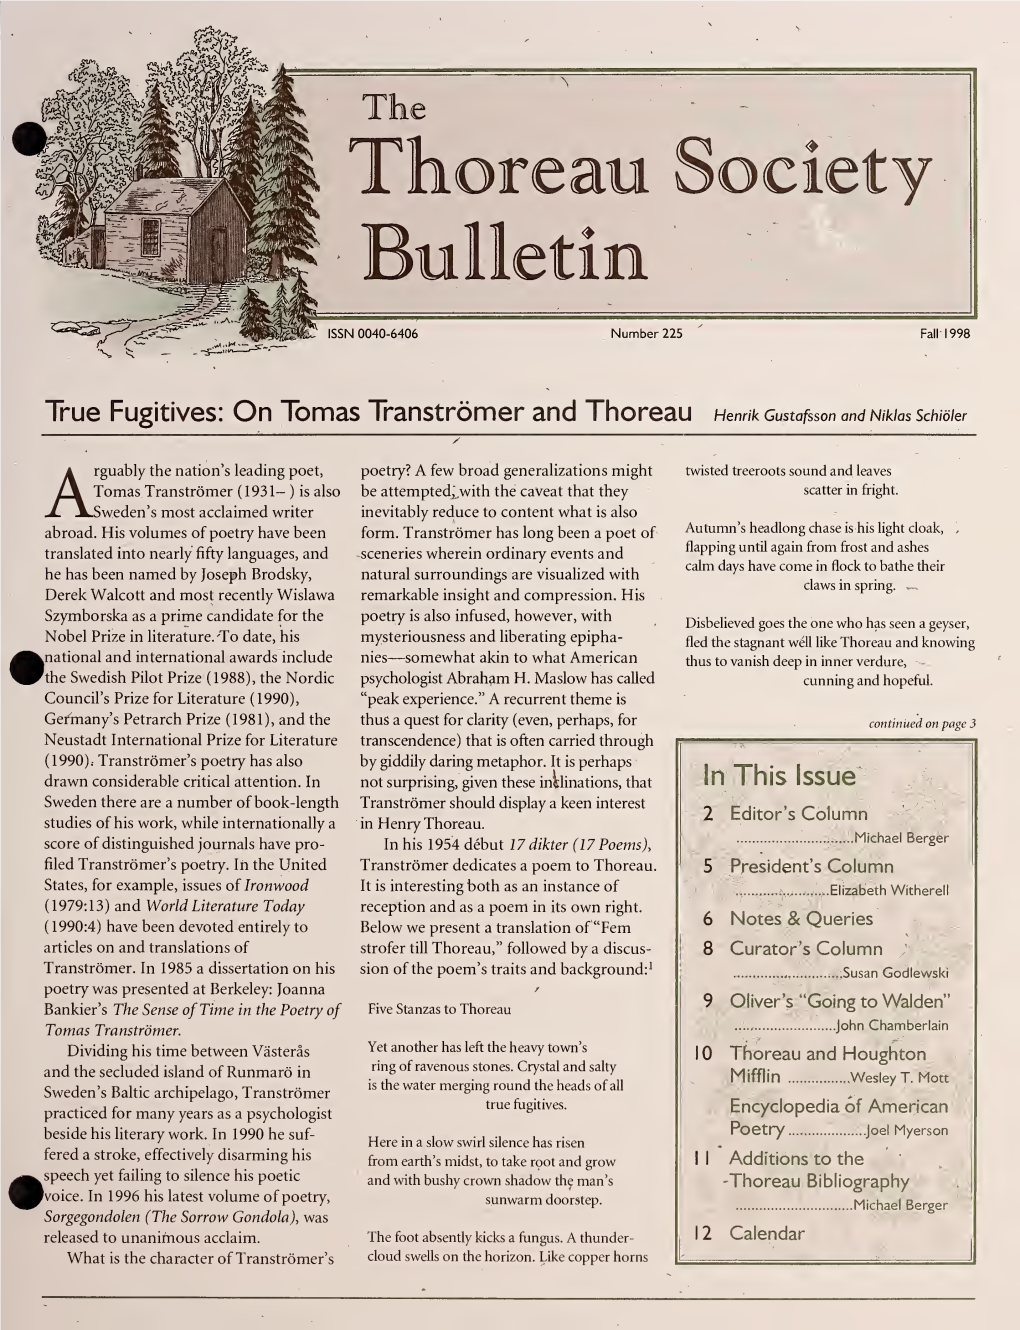 The Thoreau Society Bulletin